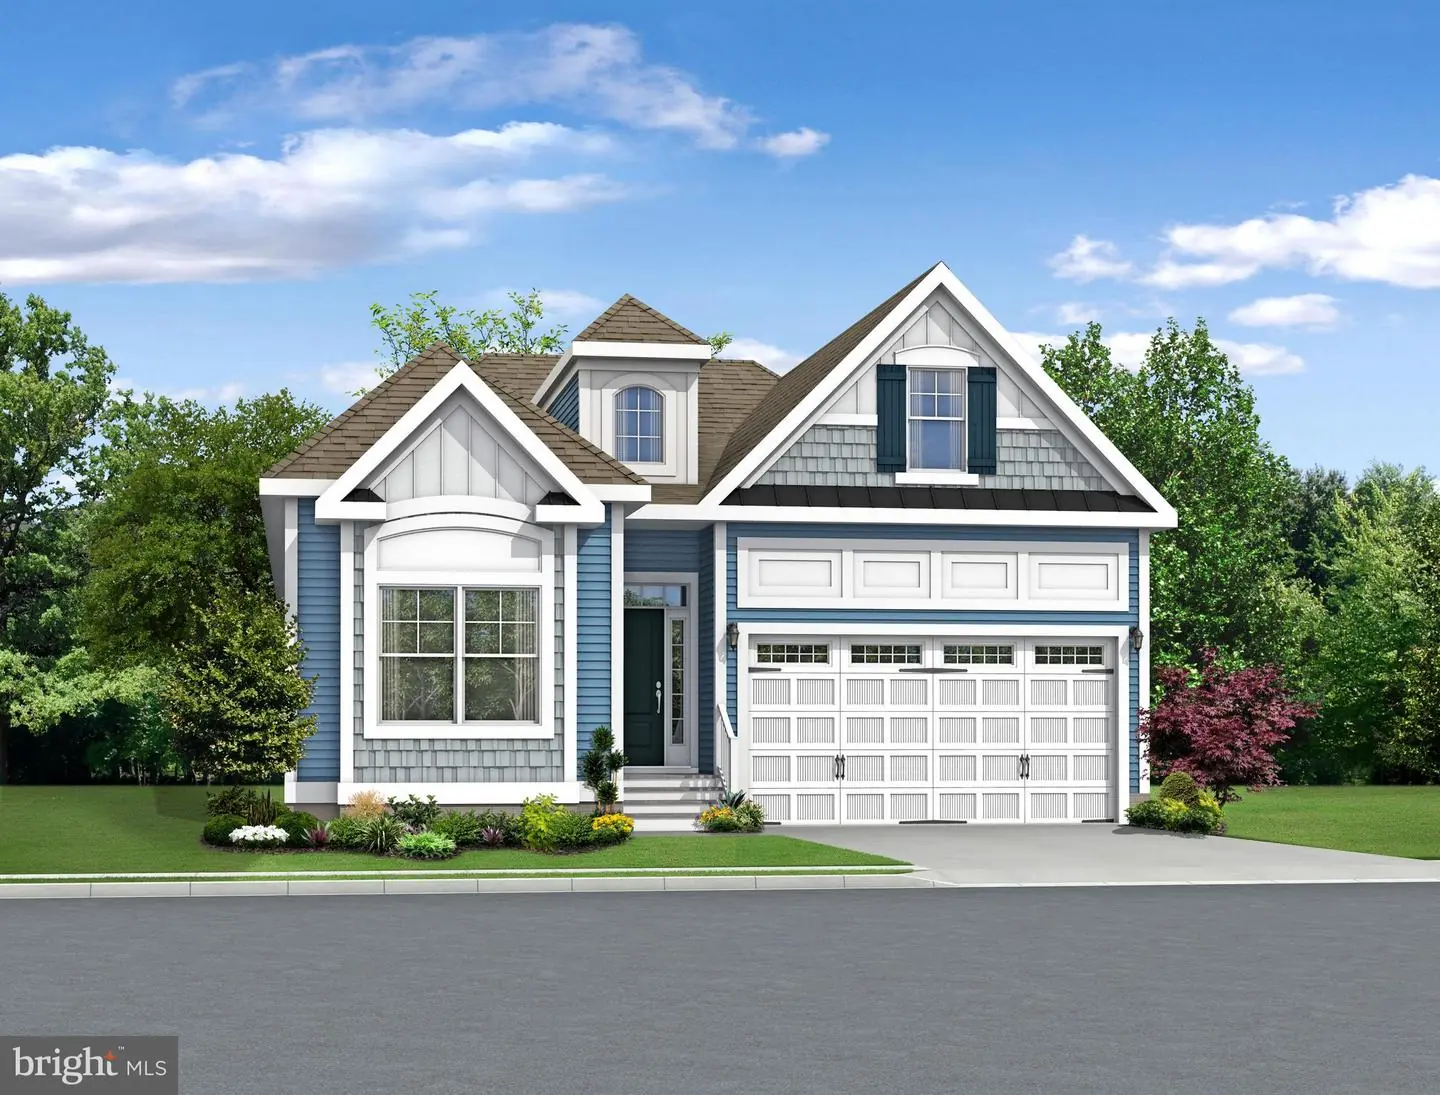 DESU2031076-801956180412-2024-01-30-16-56-08 Bluebell To-be-built Home Tbd | Millsboro, DE Real Estate For Sale | MLS# Desu2031076  - Lisa Mathena Real Estate